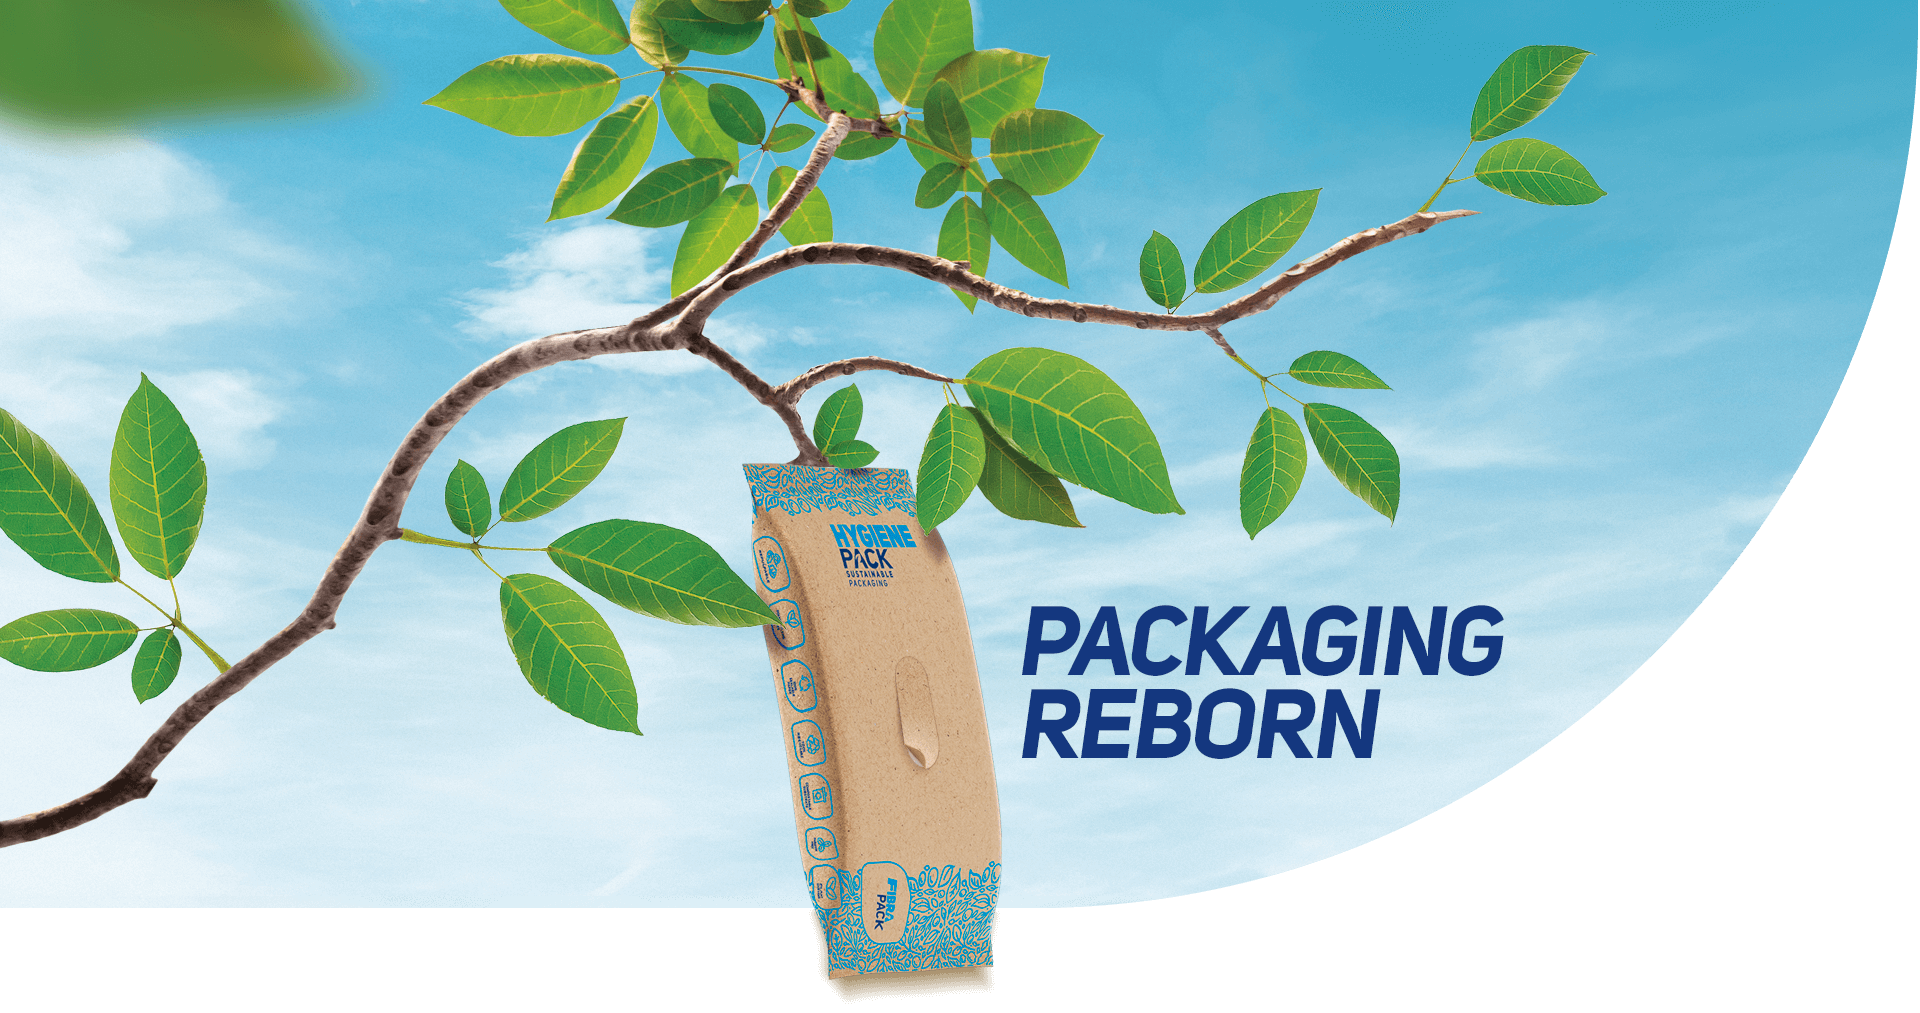 Fibra Pack - Packaging Reborn